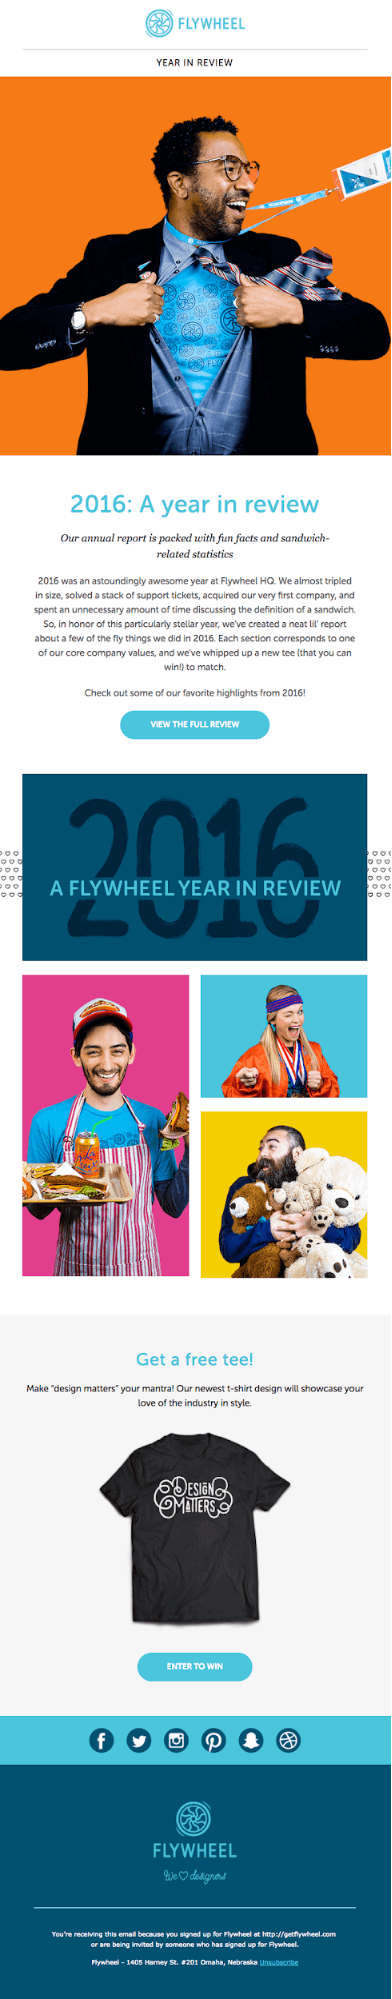 Flywheel-B2B-email